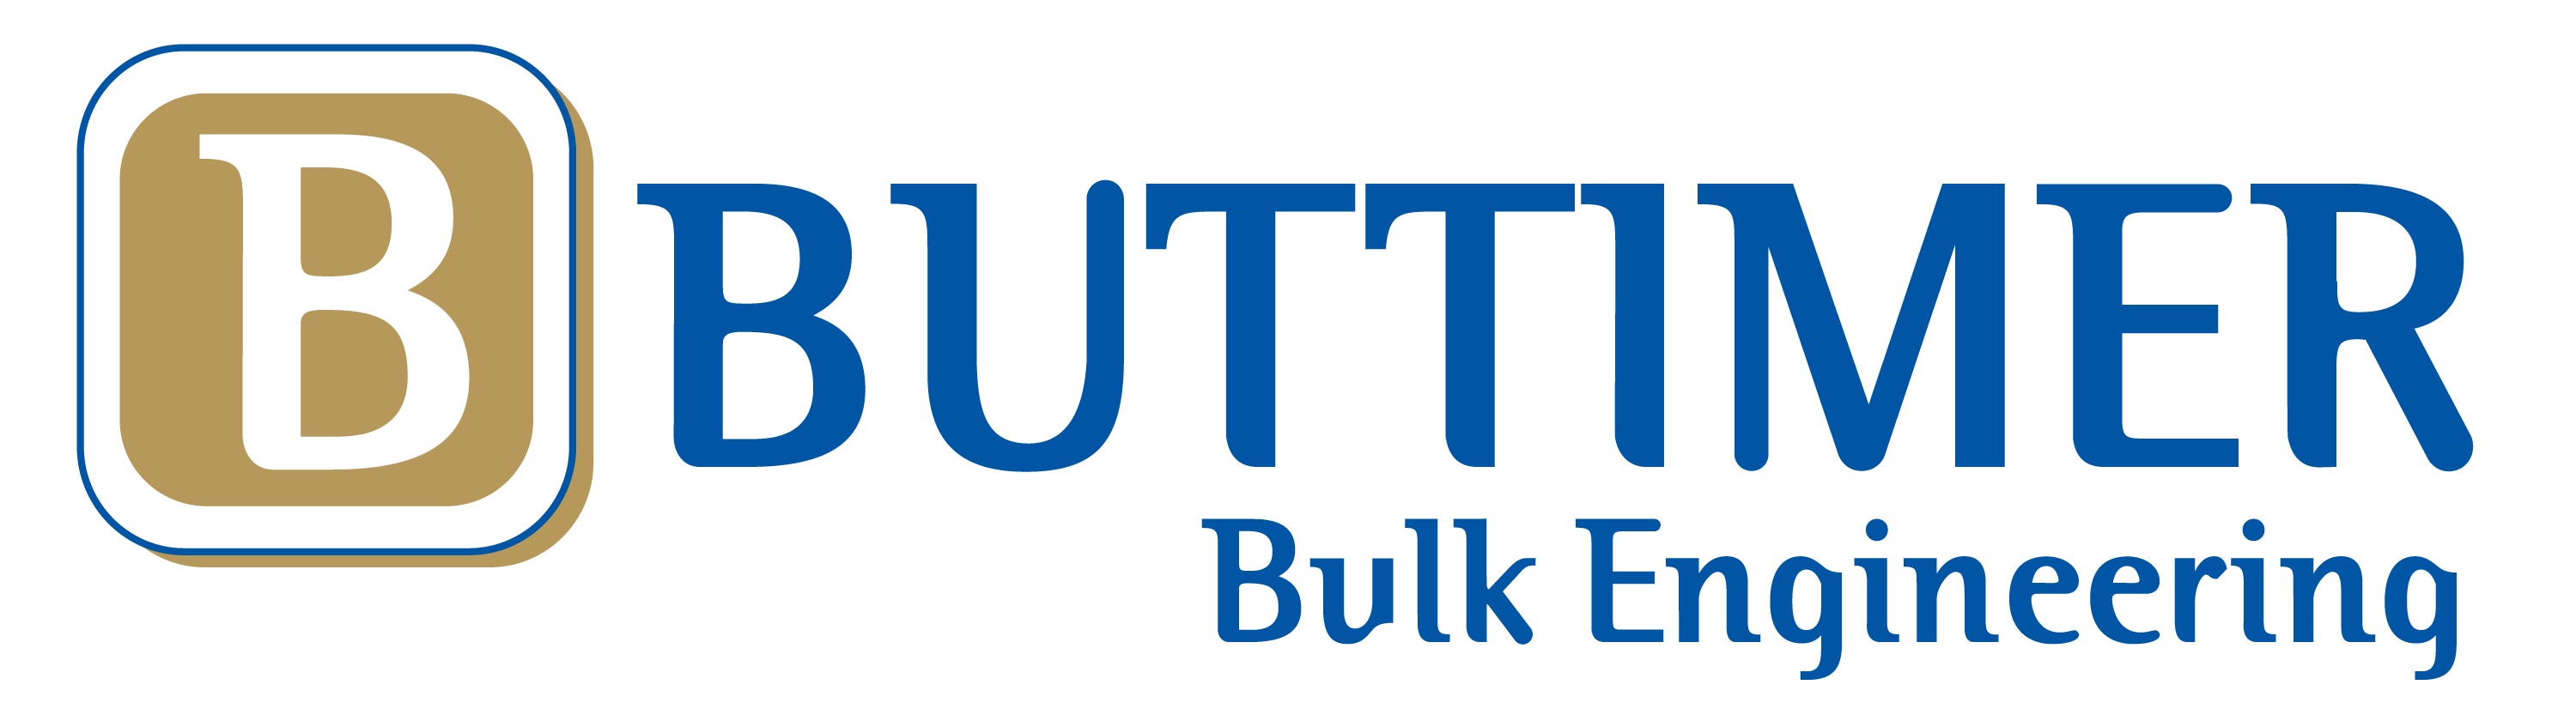 buttimerbulkengineering_logo